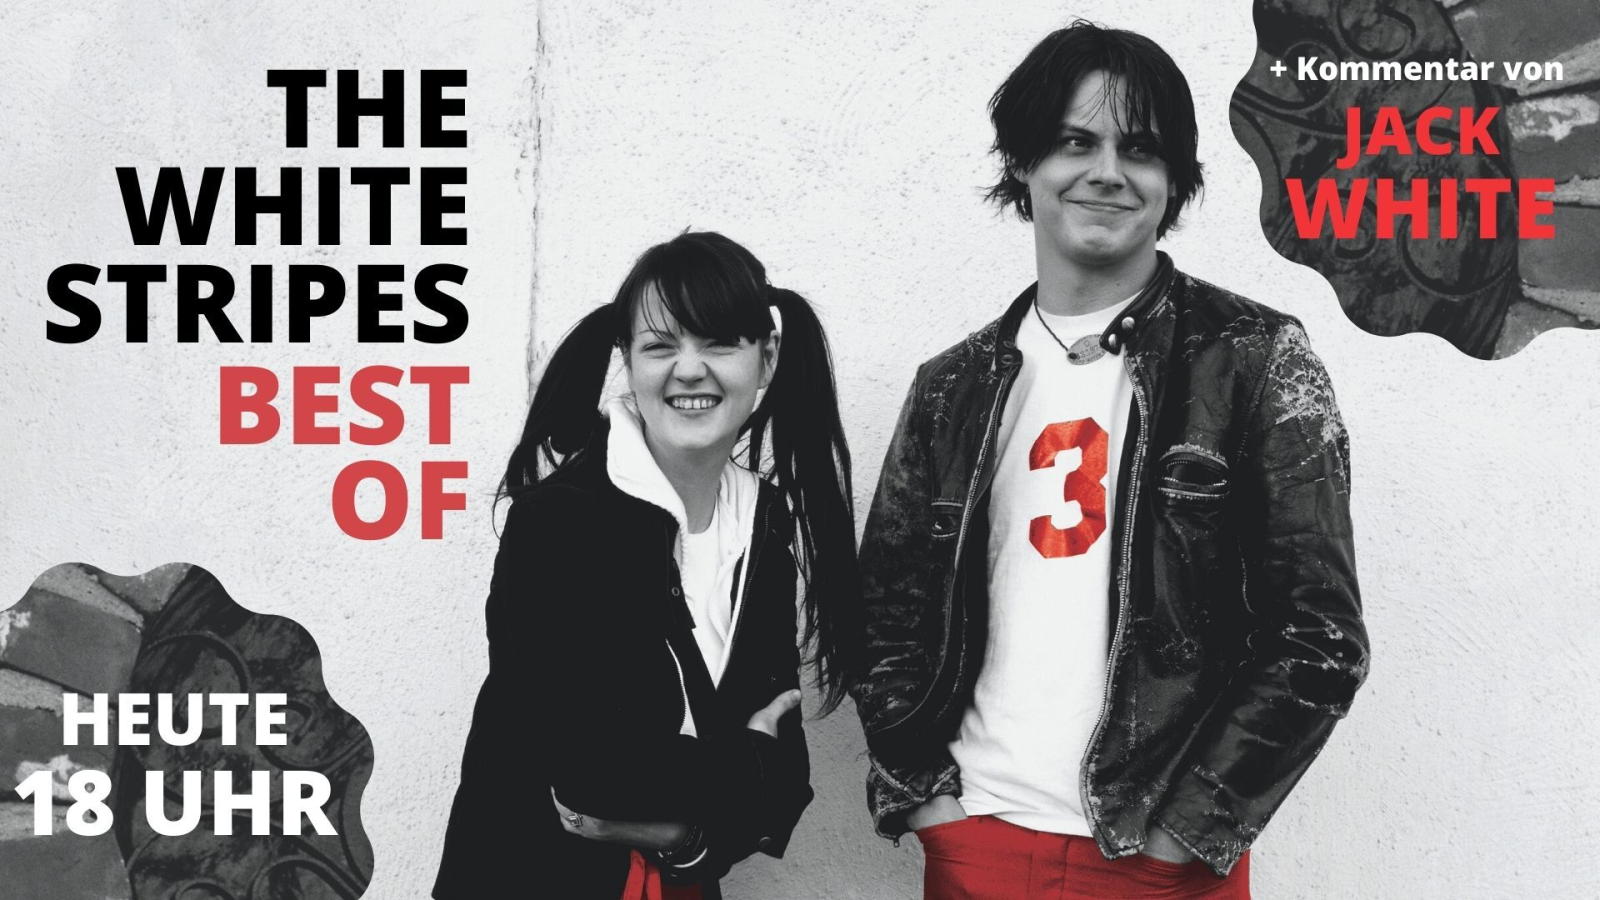 The White Stripes - "Greatest Hits" | Aktion